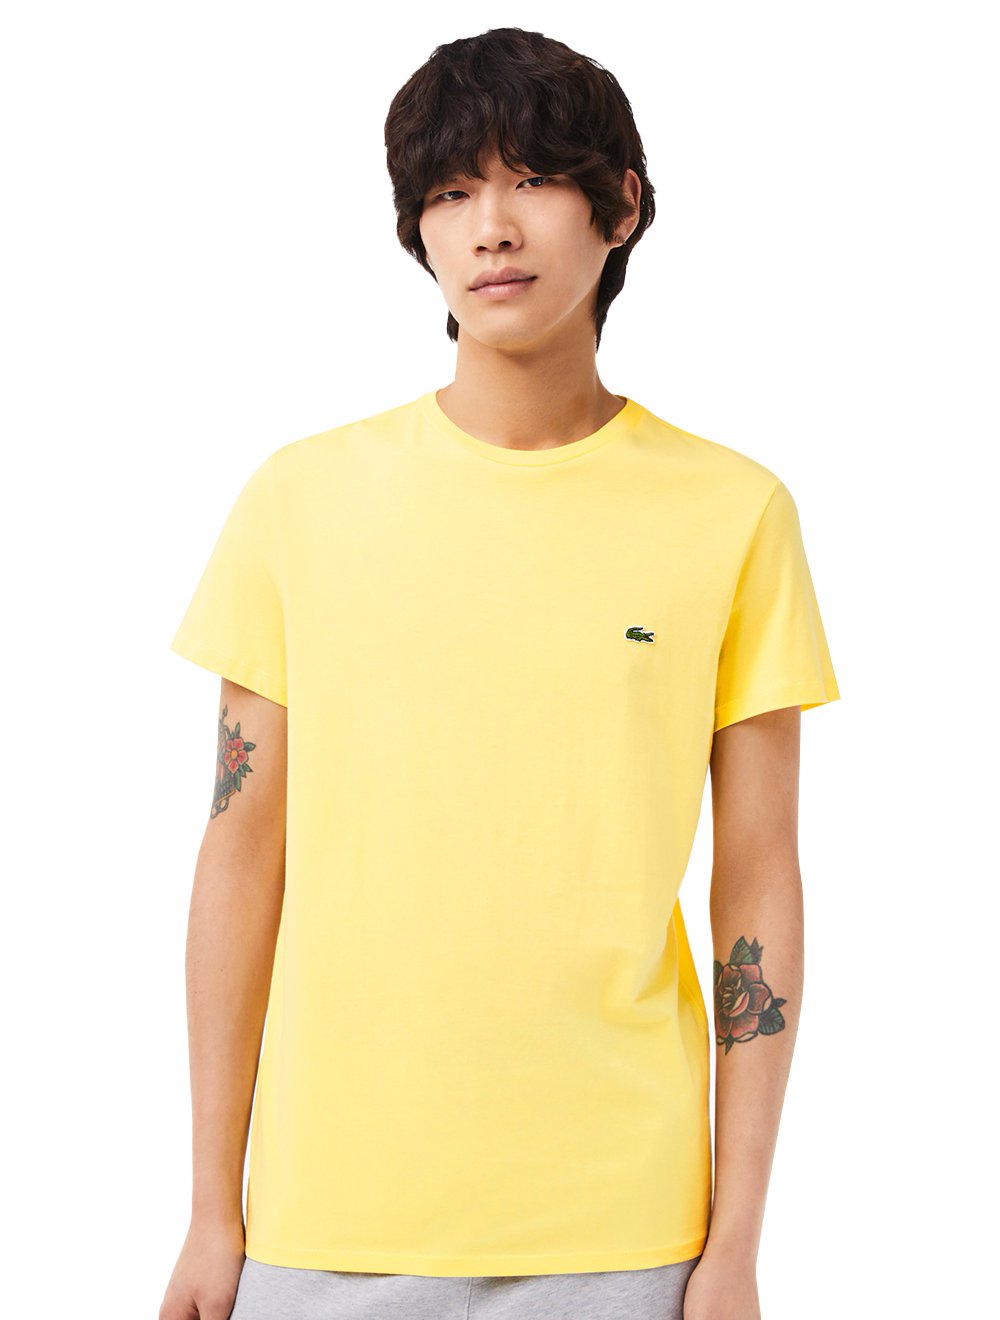 Camiseta Lacoste Masculina Jersey Pima Cotton Amarelo Claro